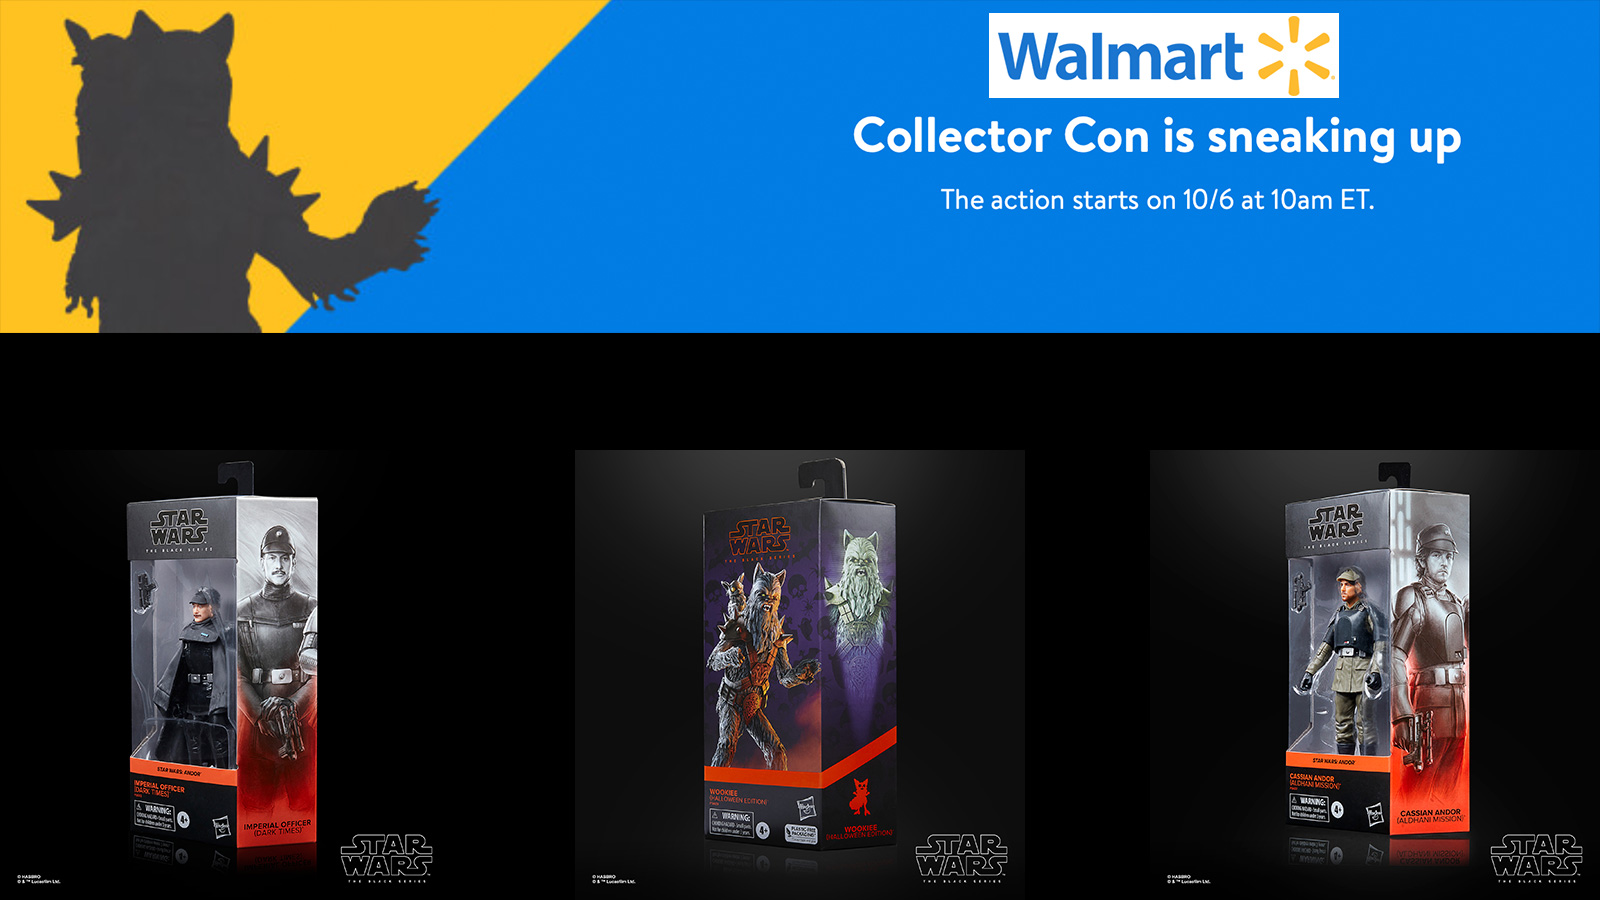 Reminder - Walmart’s Collector Con Starts On 10/6 At 10AM ET